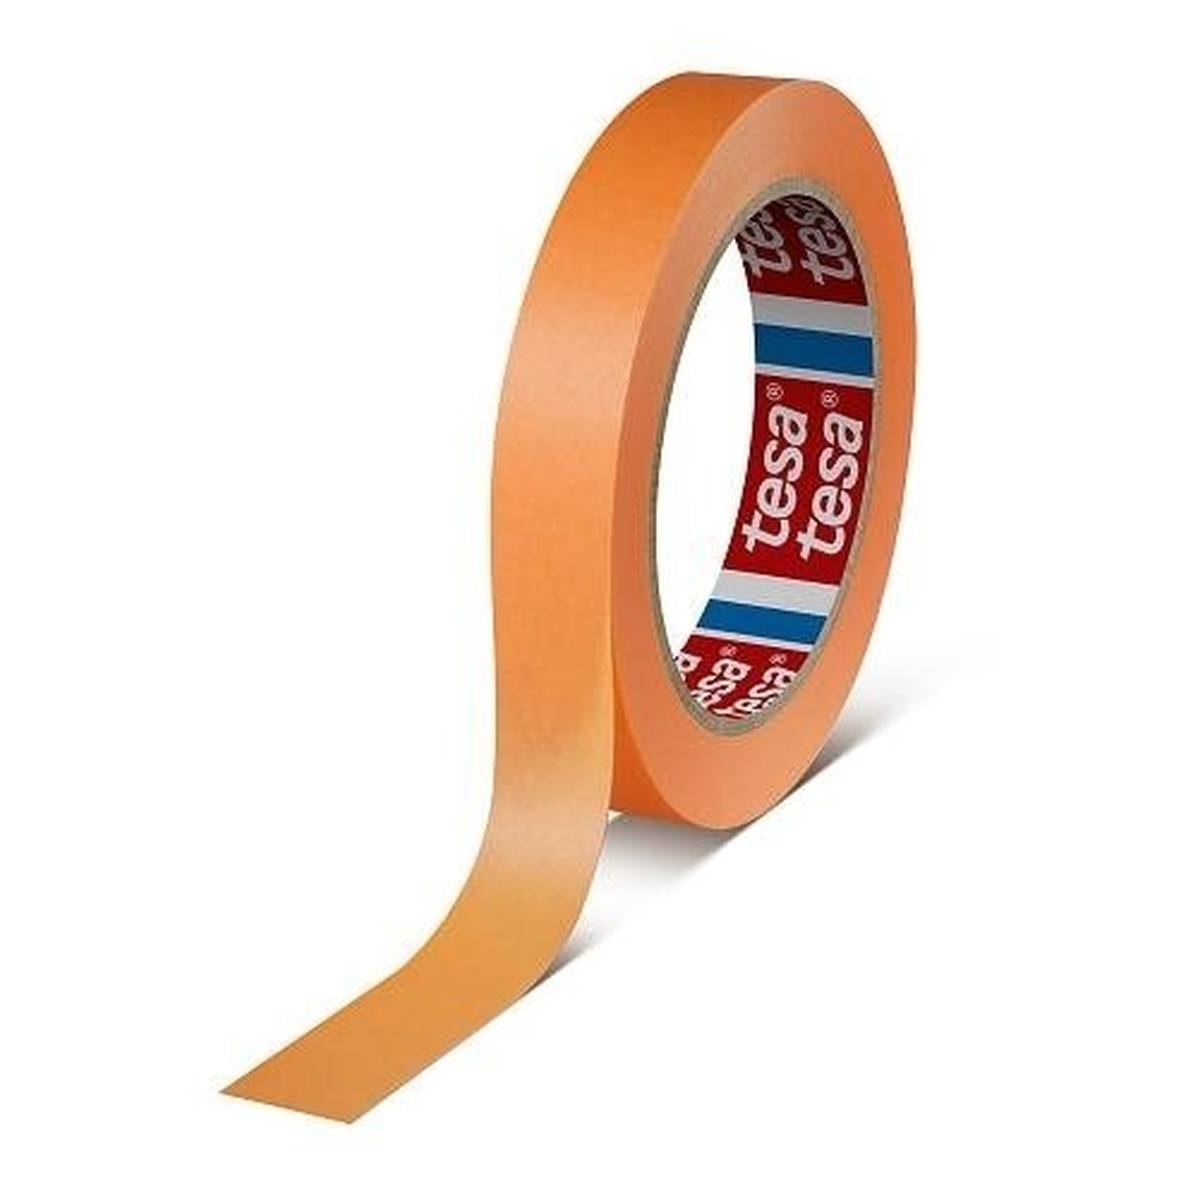 Tesakrepp 4342 Precision crepe washi tape 25mmx50m orange